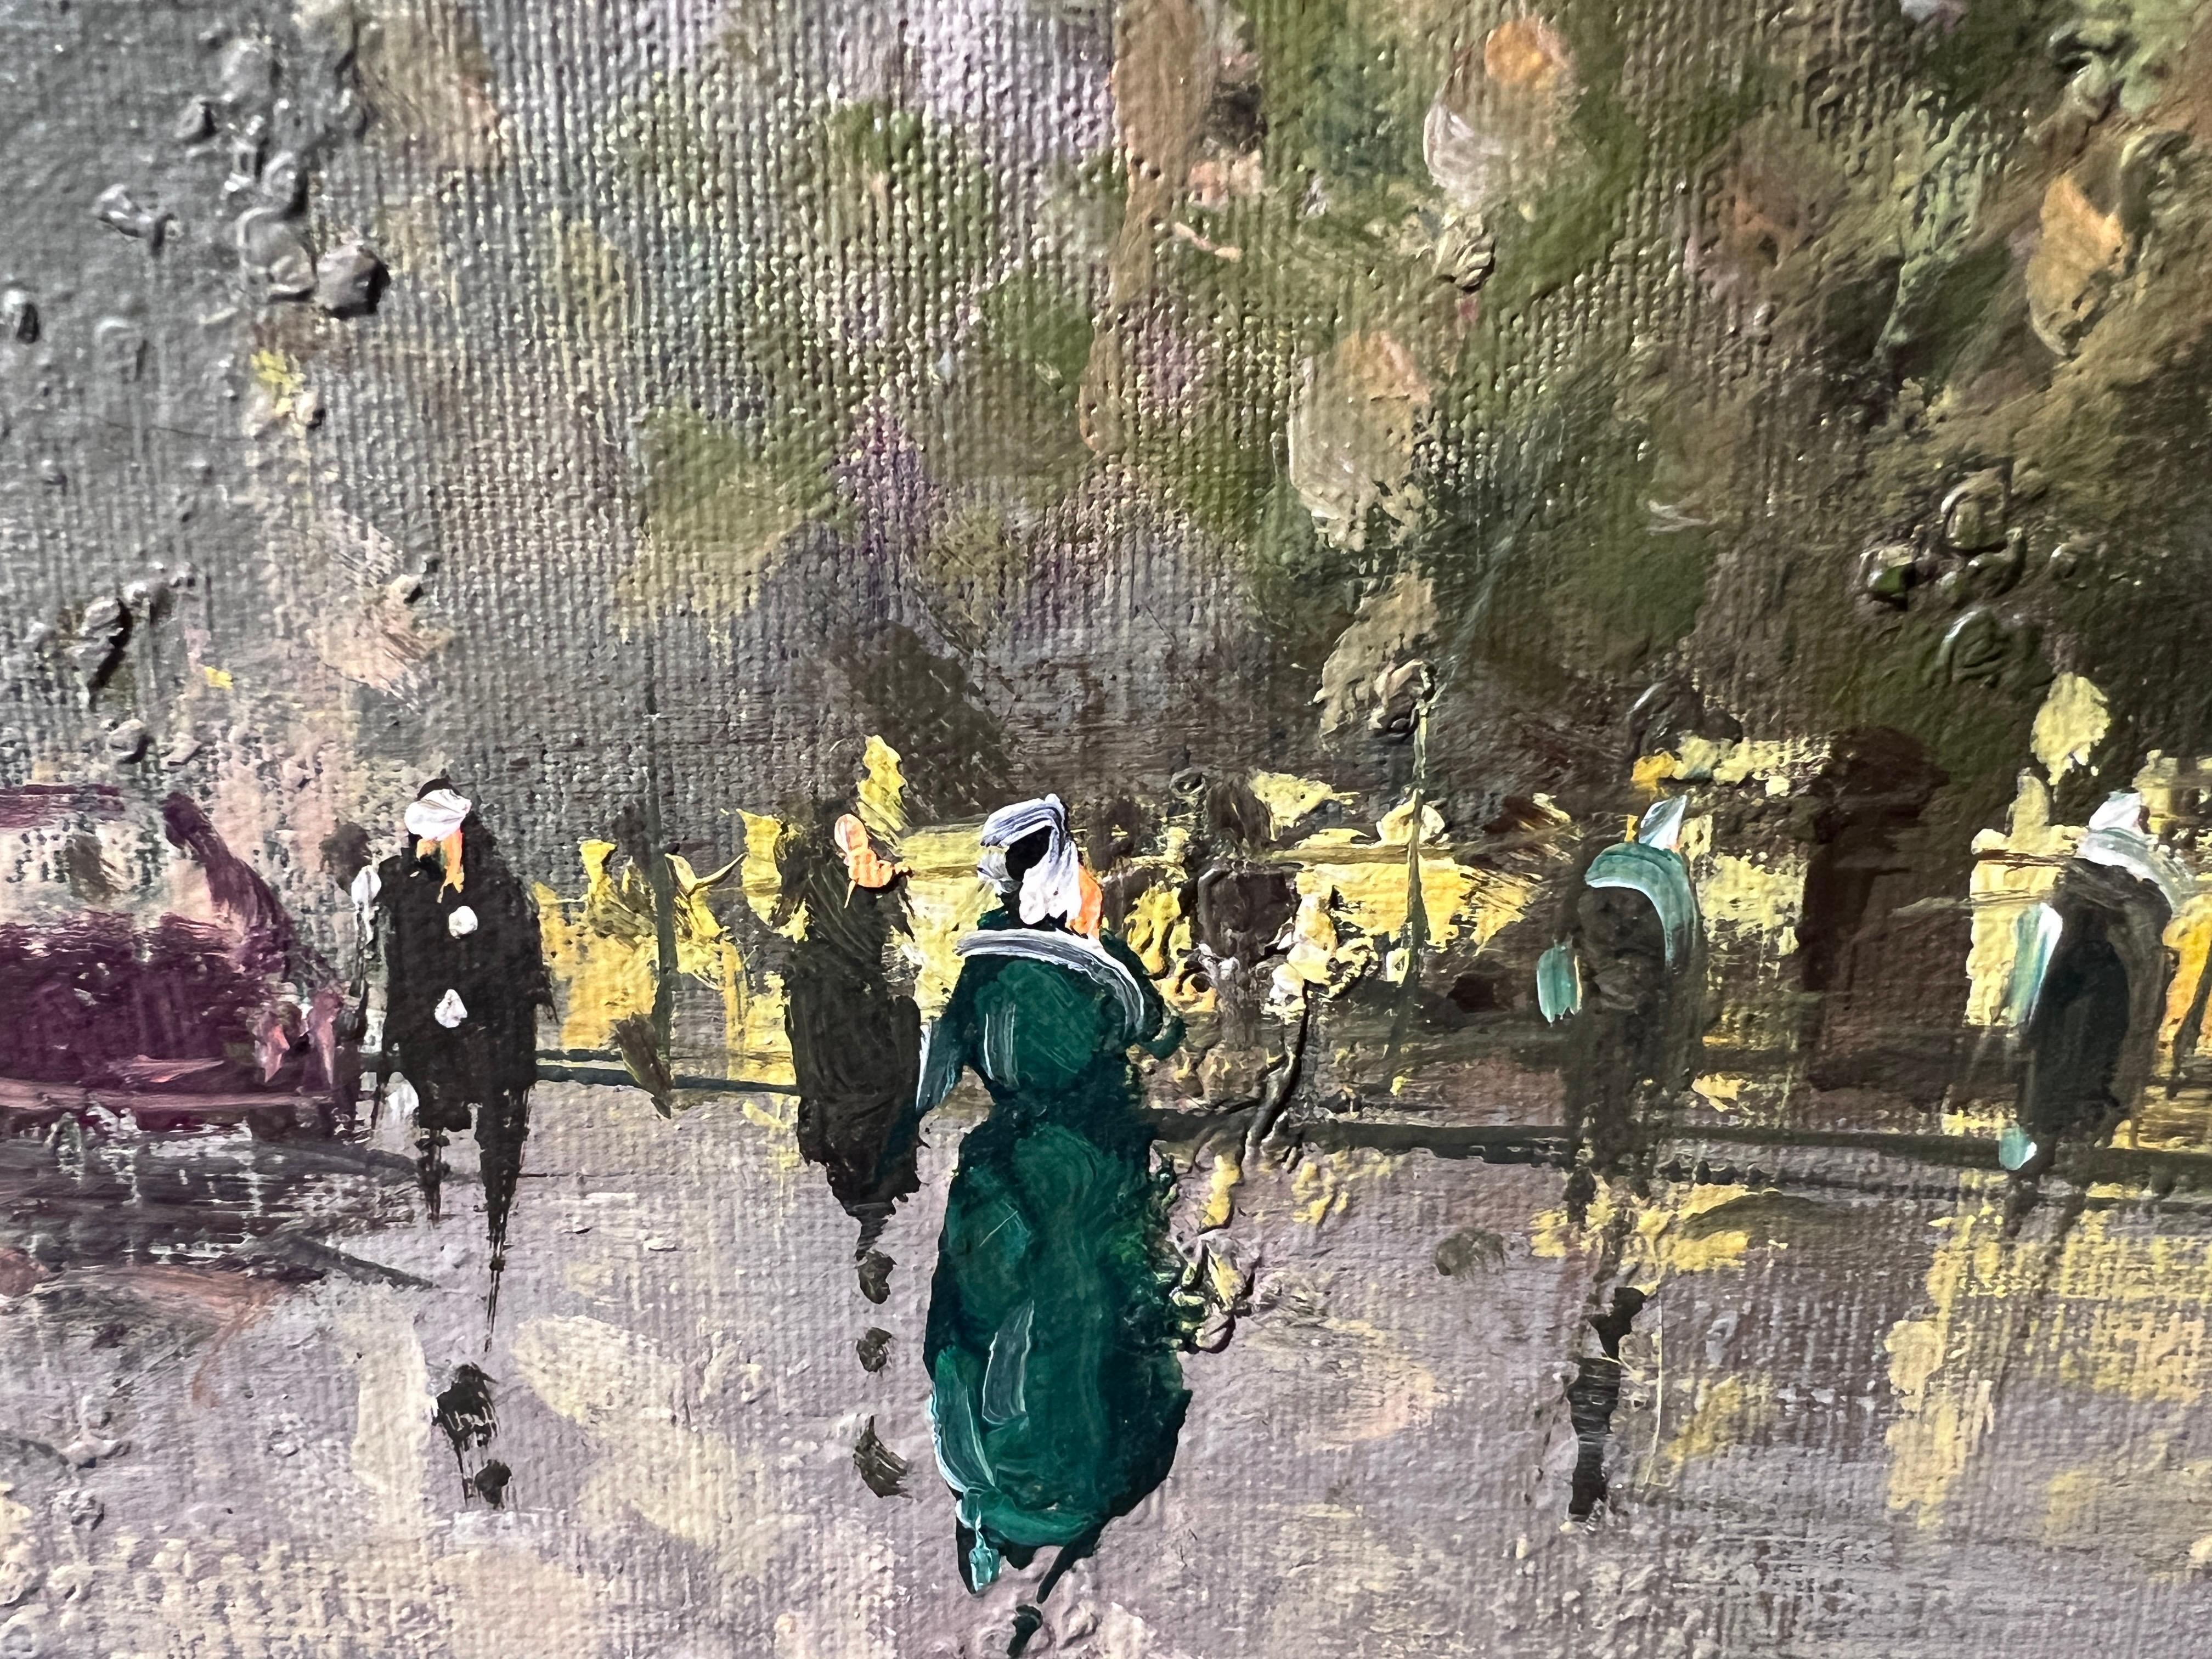 Artist K. Pacino original oil painting on canvas, Paris Street Scene, Framed 6